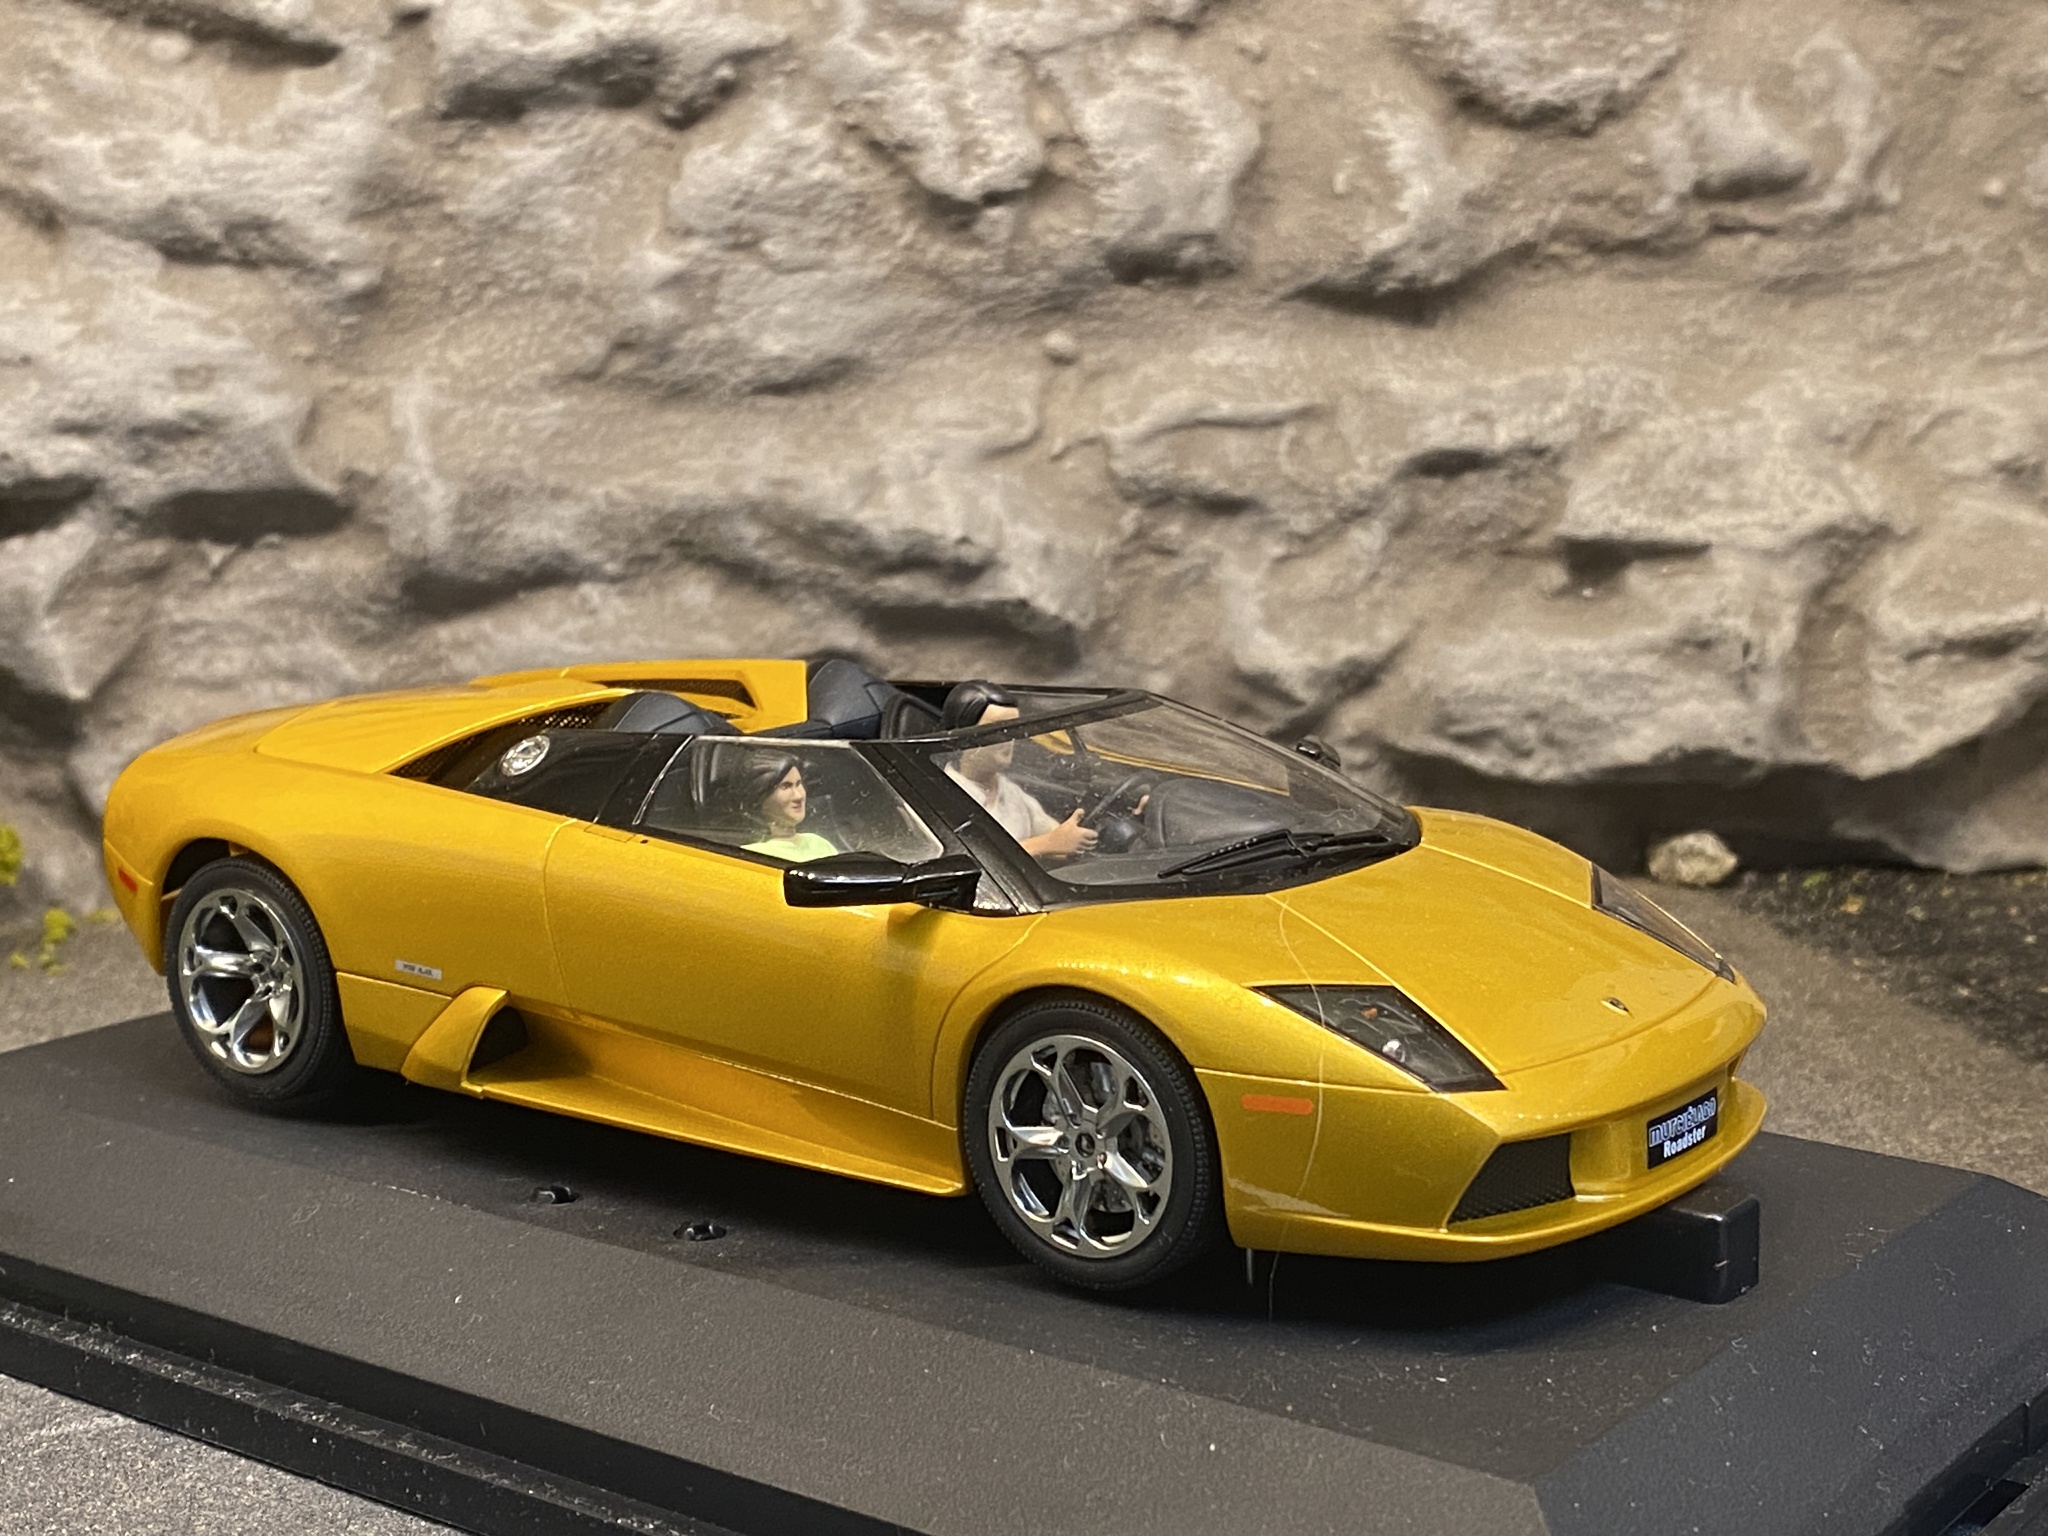 Skala 1/24 Analog Slotcar - Lamborghini Murciélago Roadster Gold fr AUTOart Slot Racing